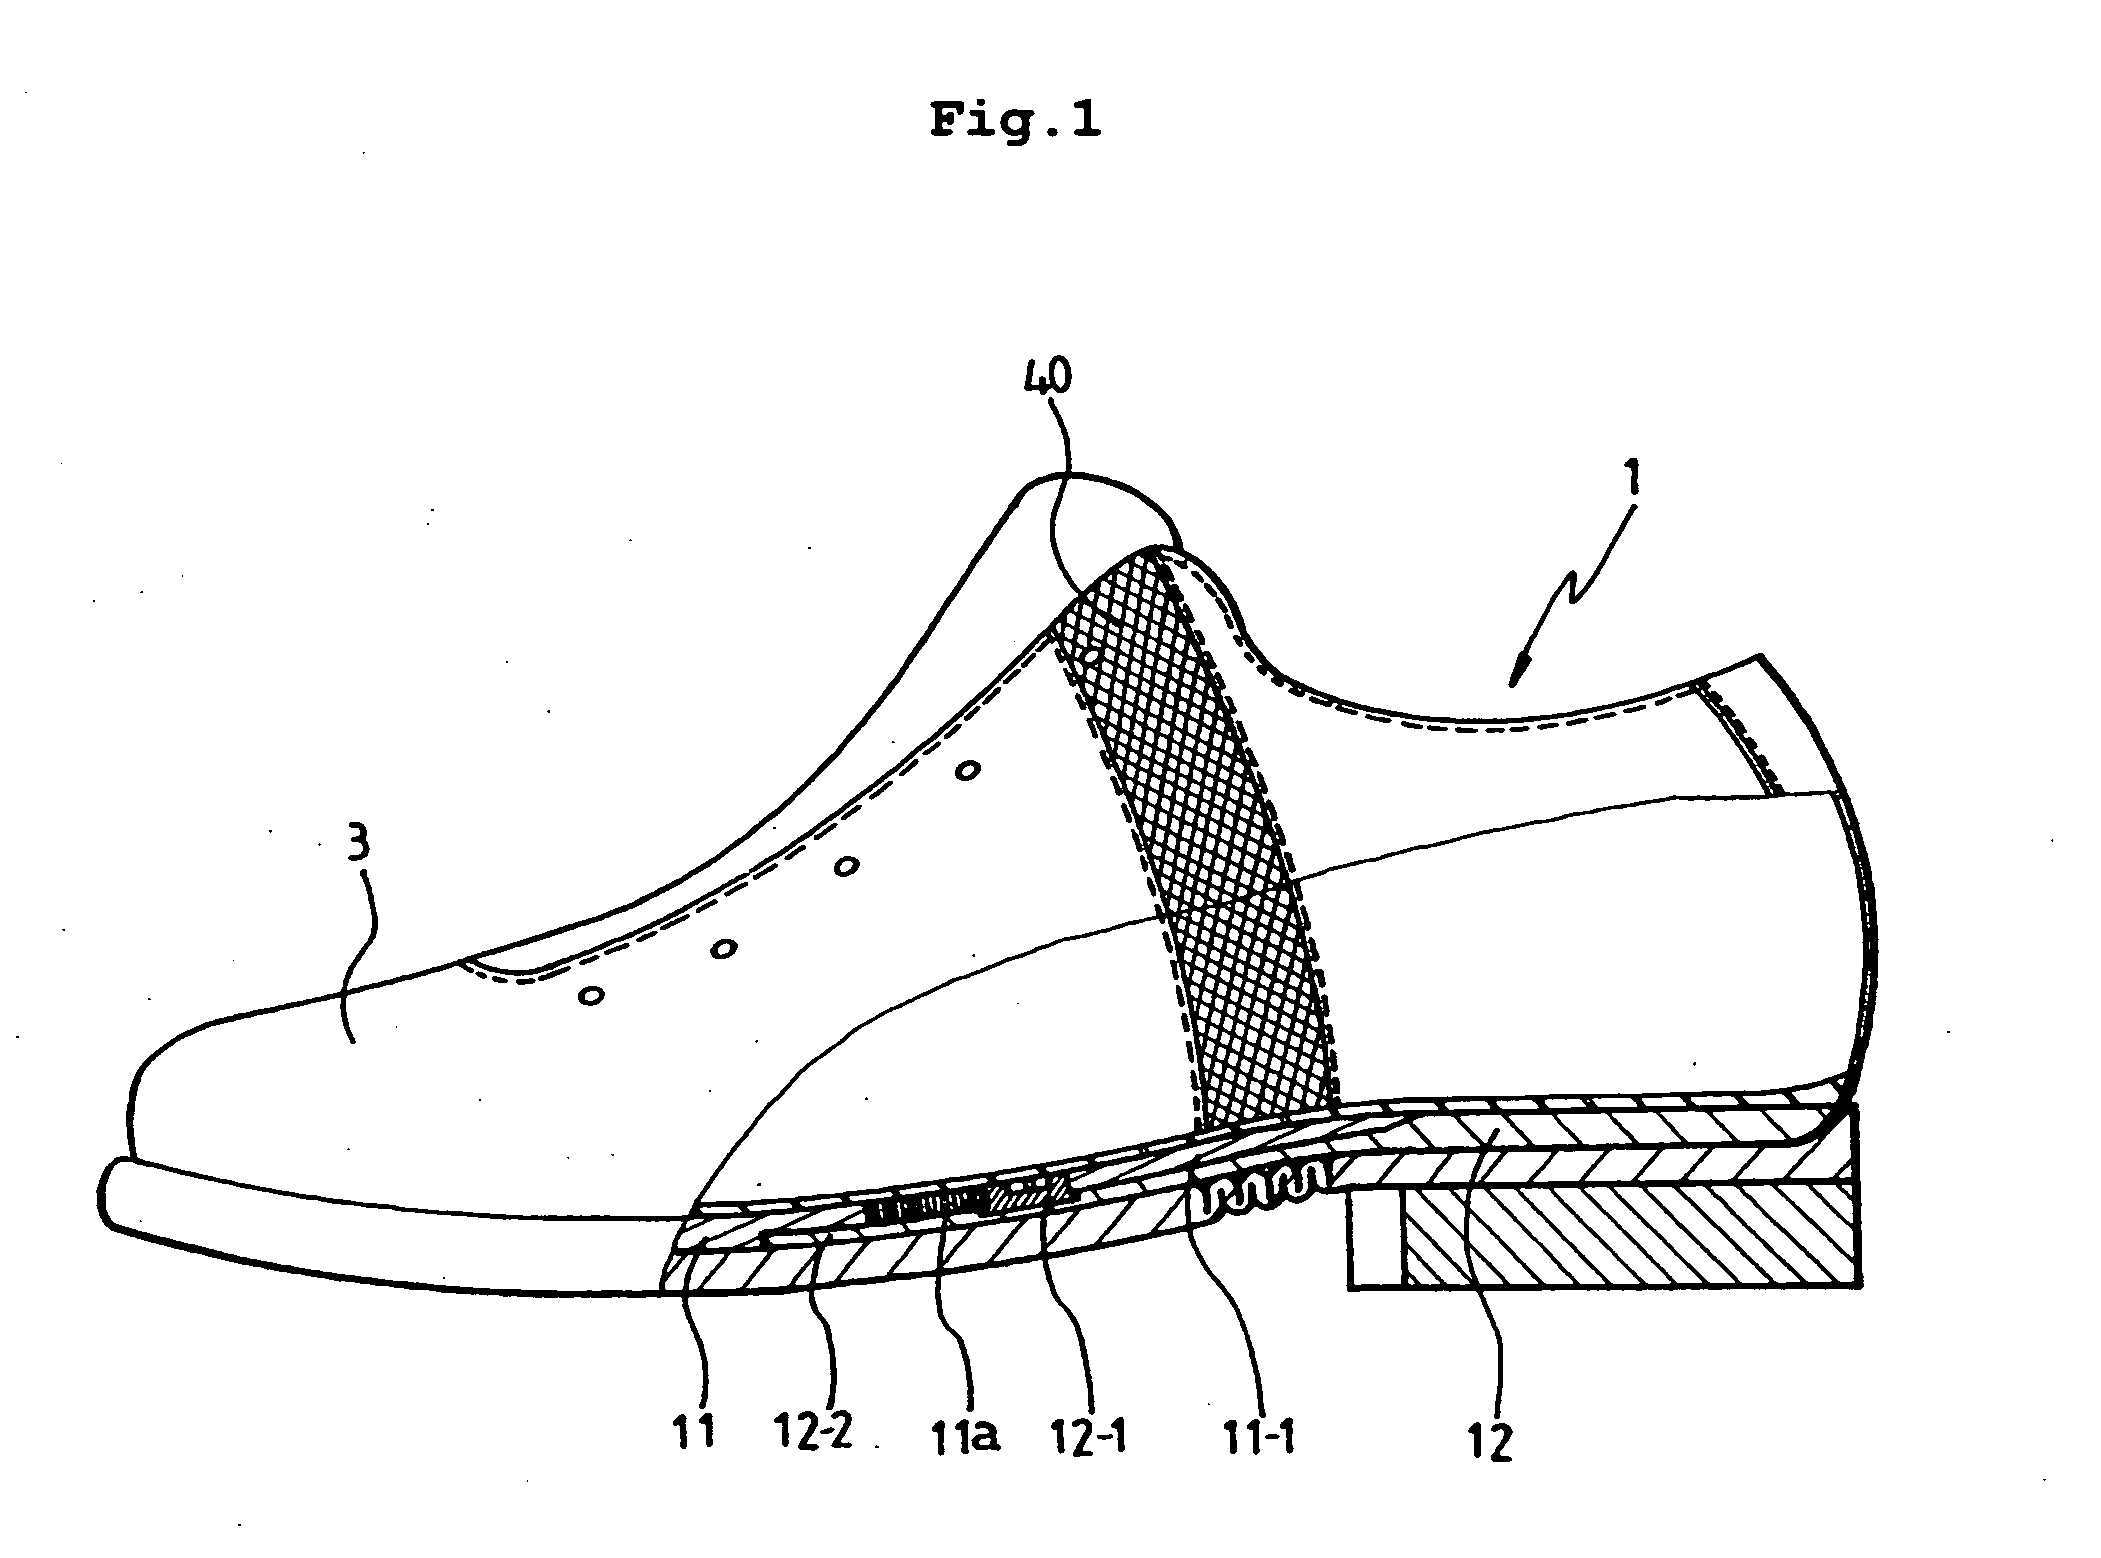 Length-adjustable shoe